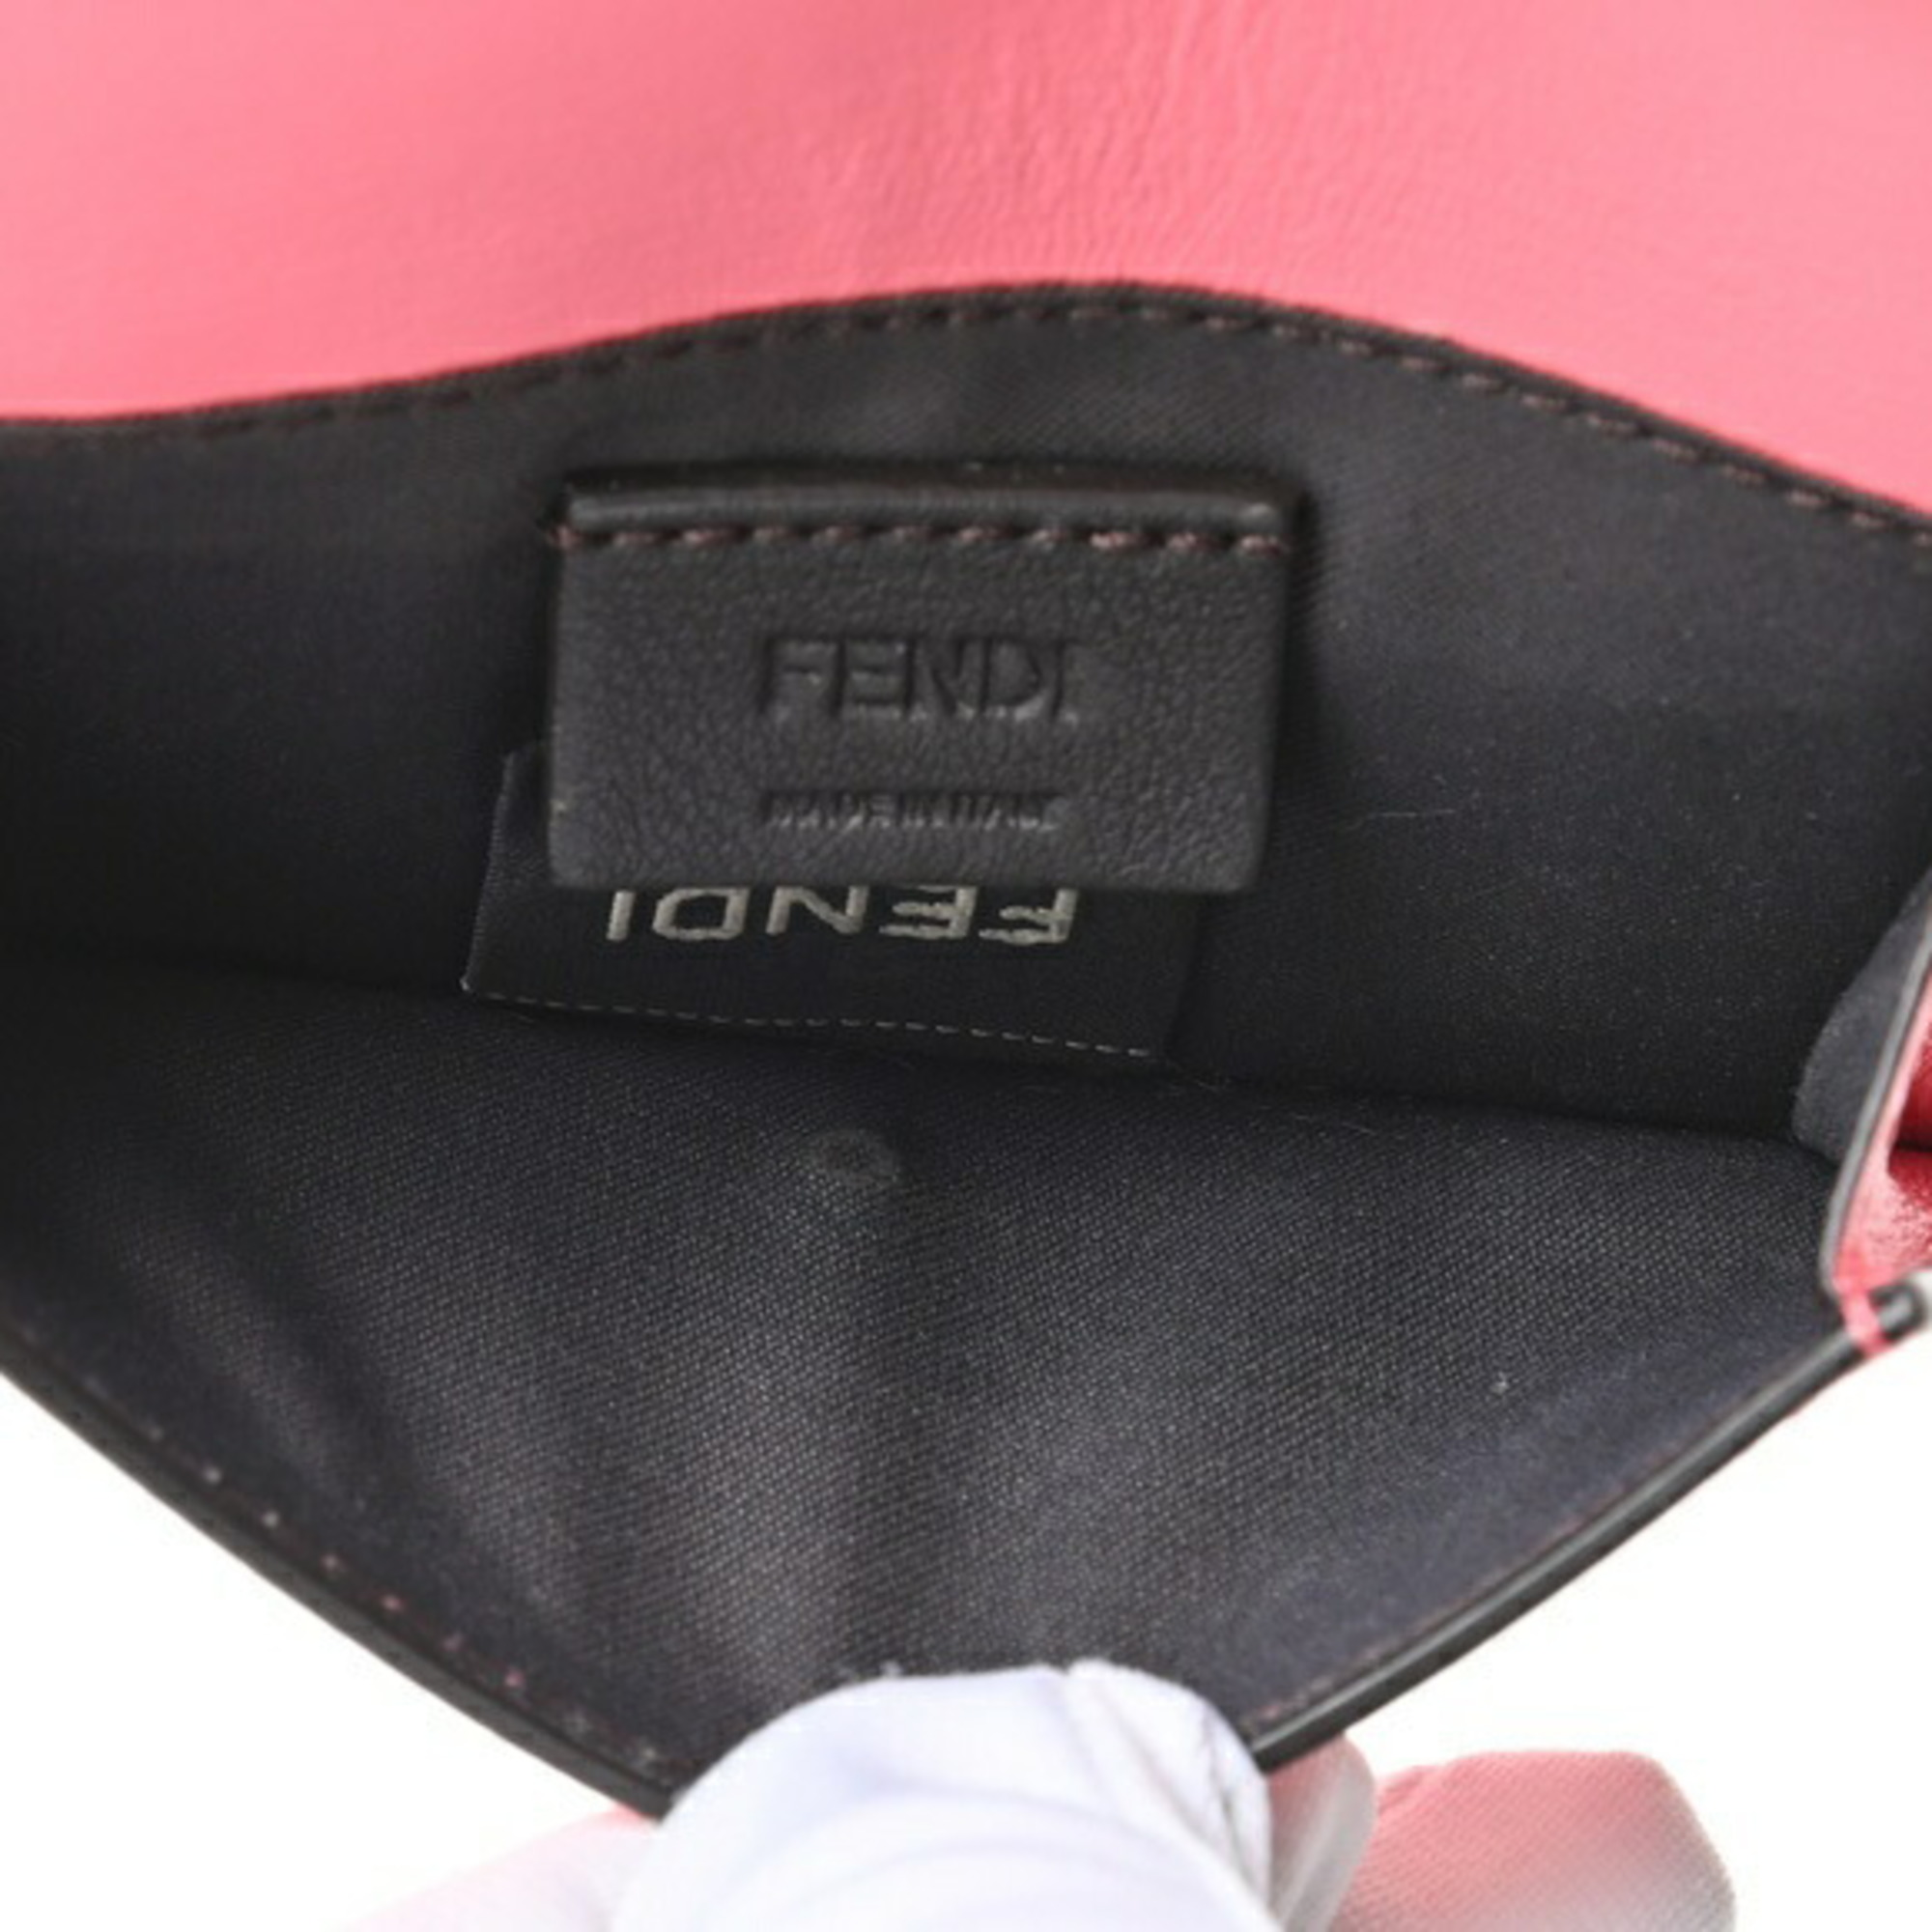 Fendi FEND Baguette Card Case 8M0423 FF Nappa Leather Pink S-155685